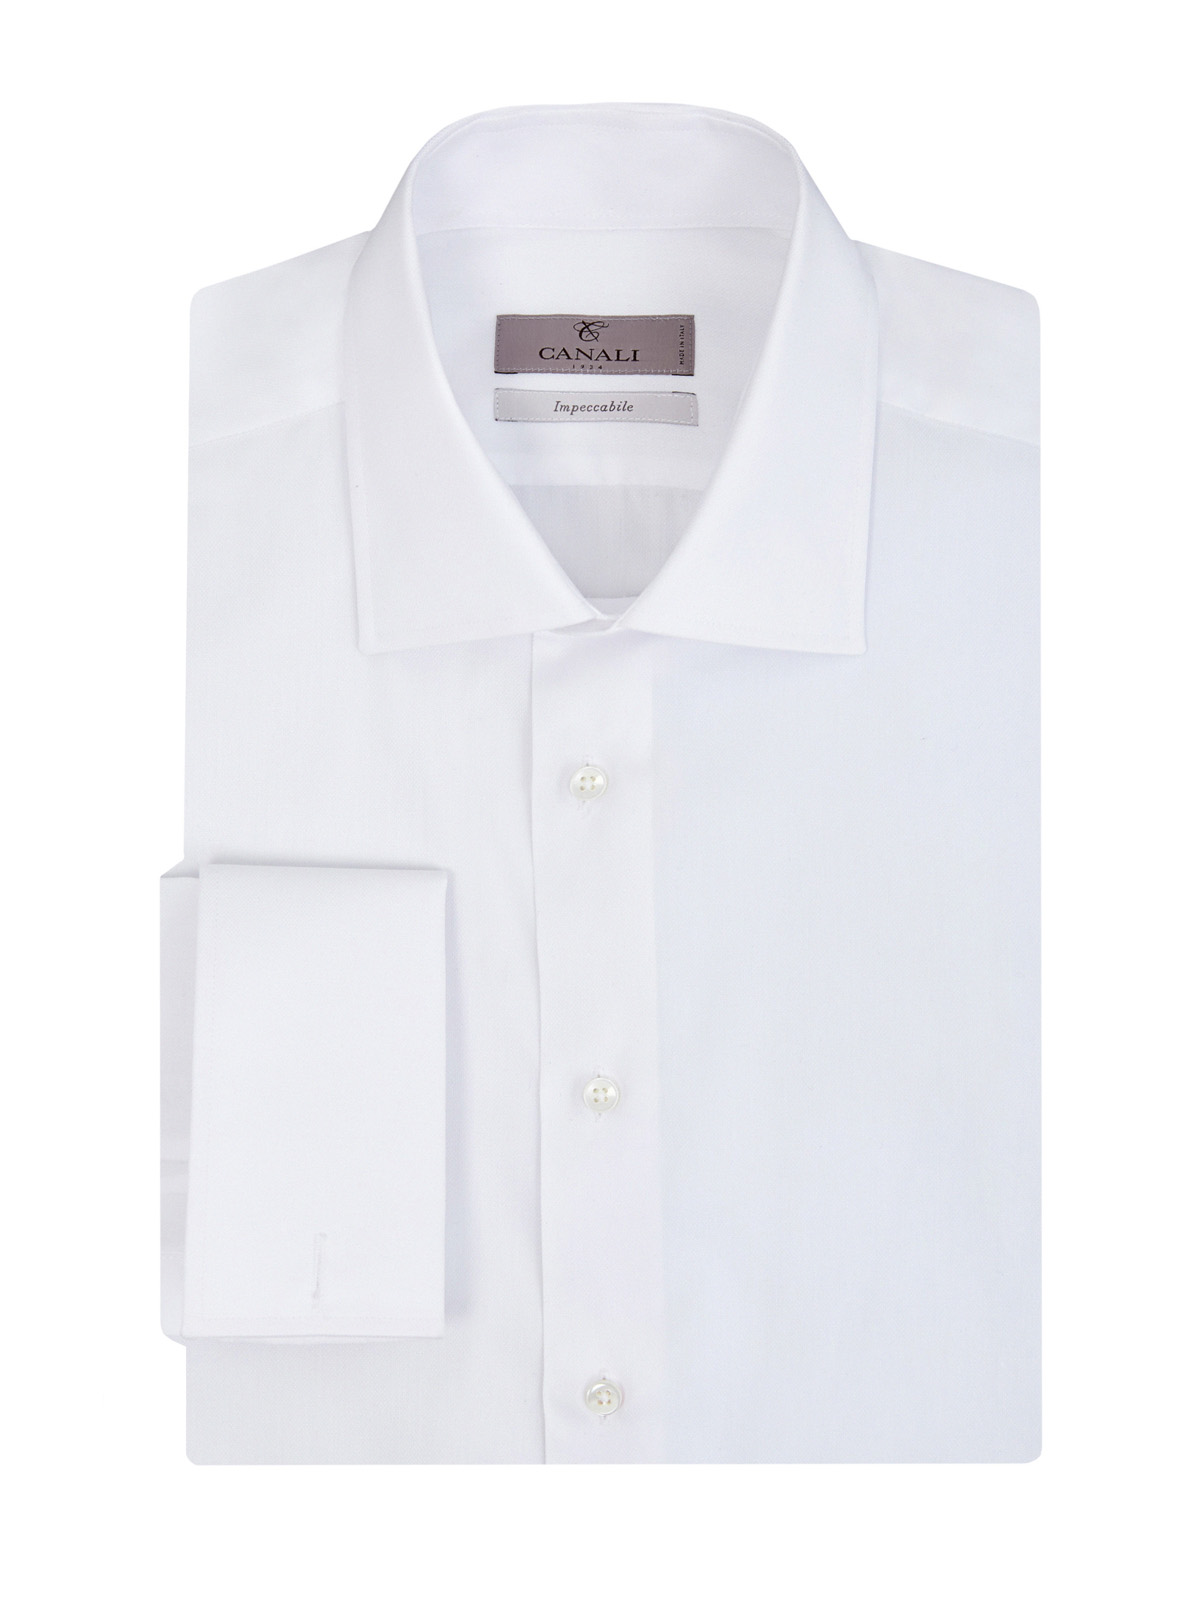 Рубашка из поплина Impeccabile с манжетами под запонки CANALI, цвет белый, размер 52;54;56;58;52 - фото 1